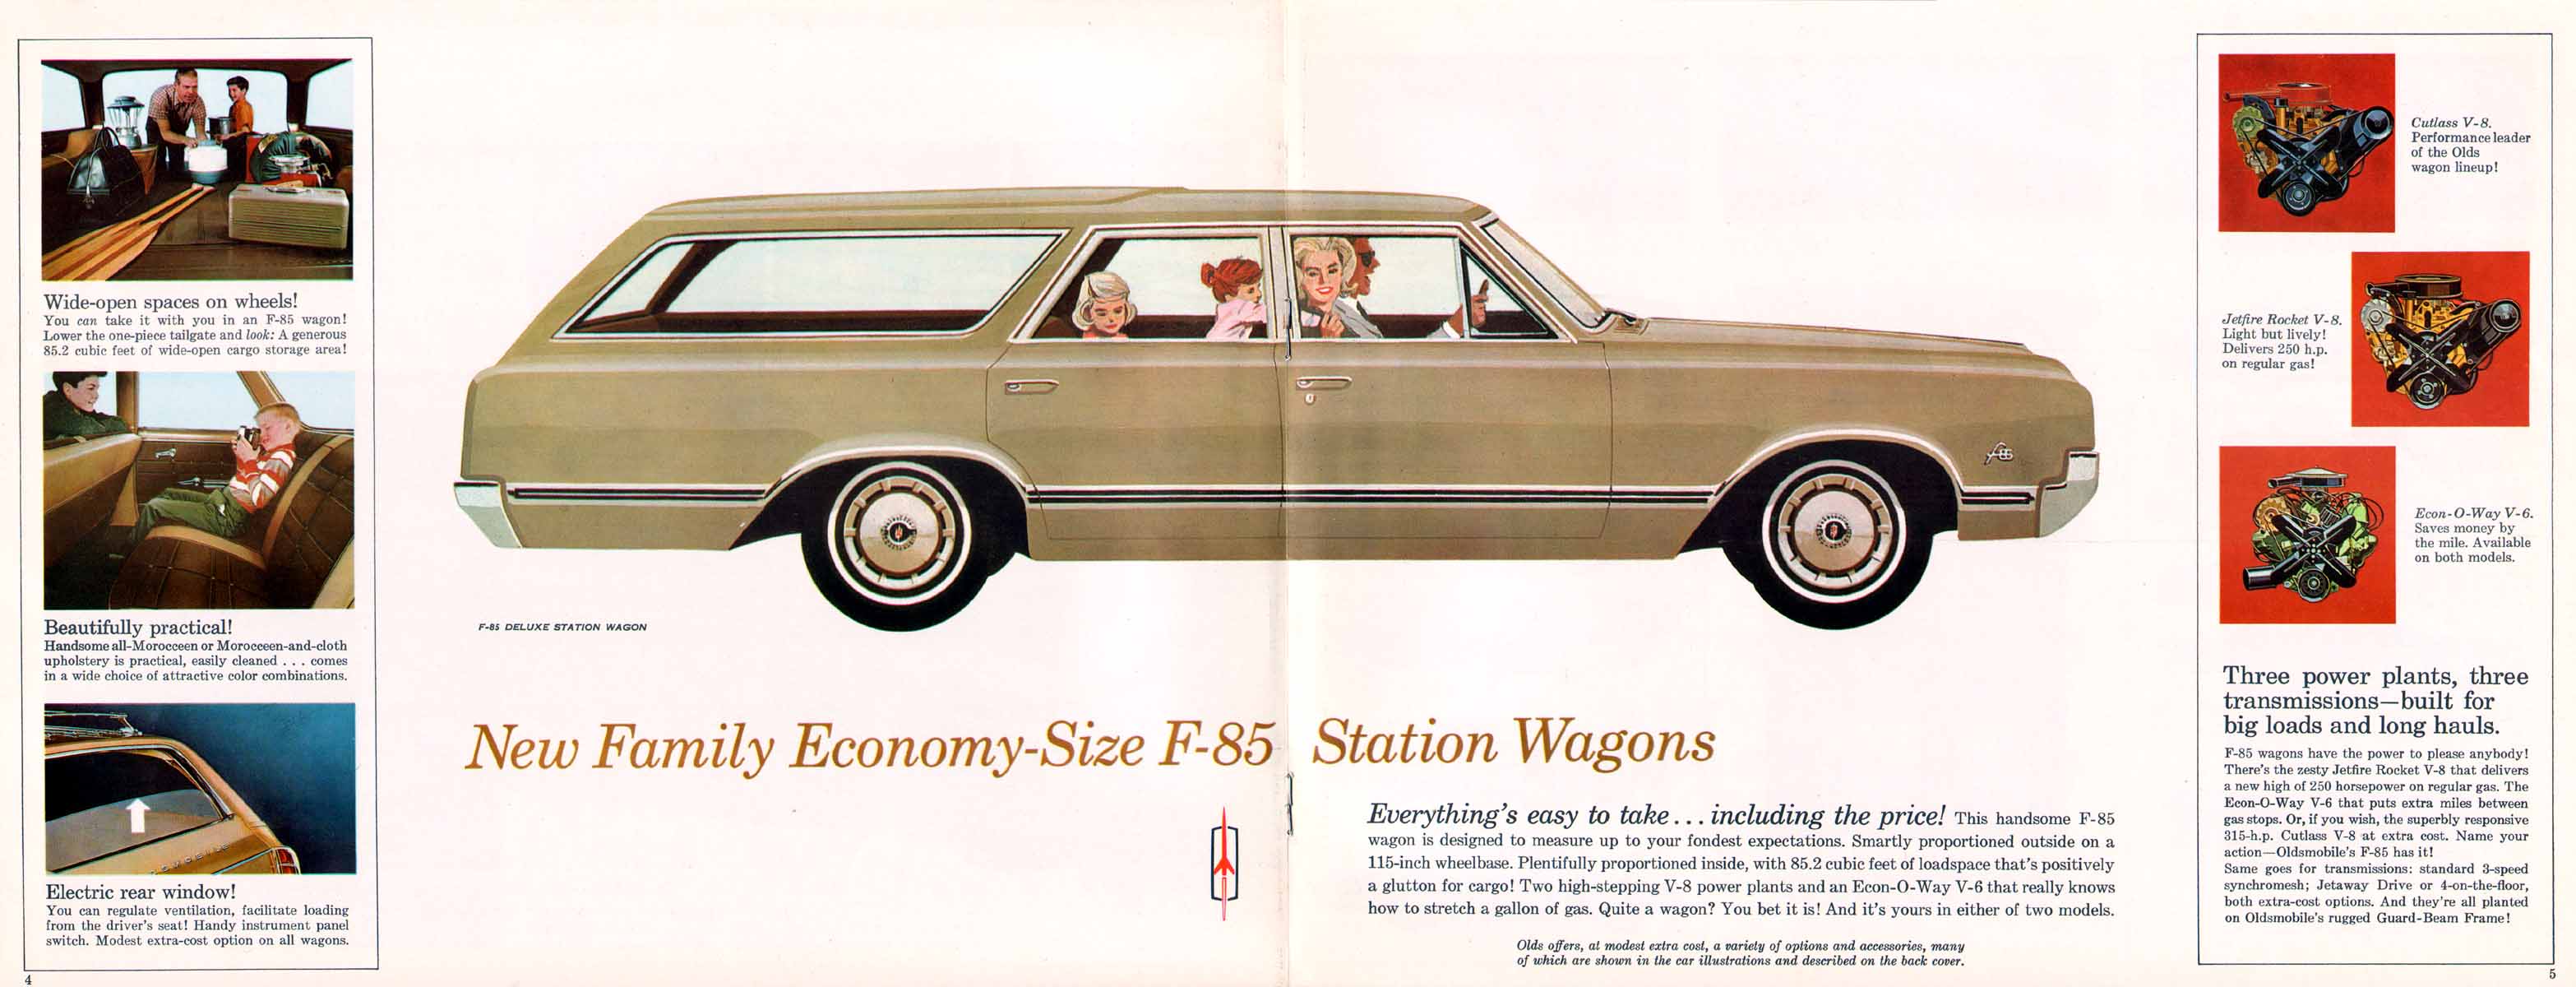 1965 Oldsmobile Wagons-04-05